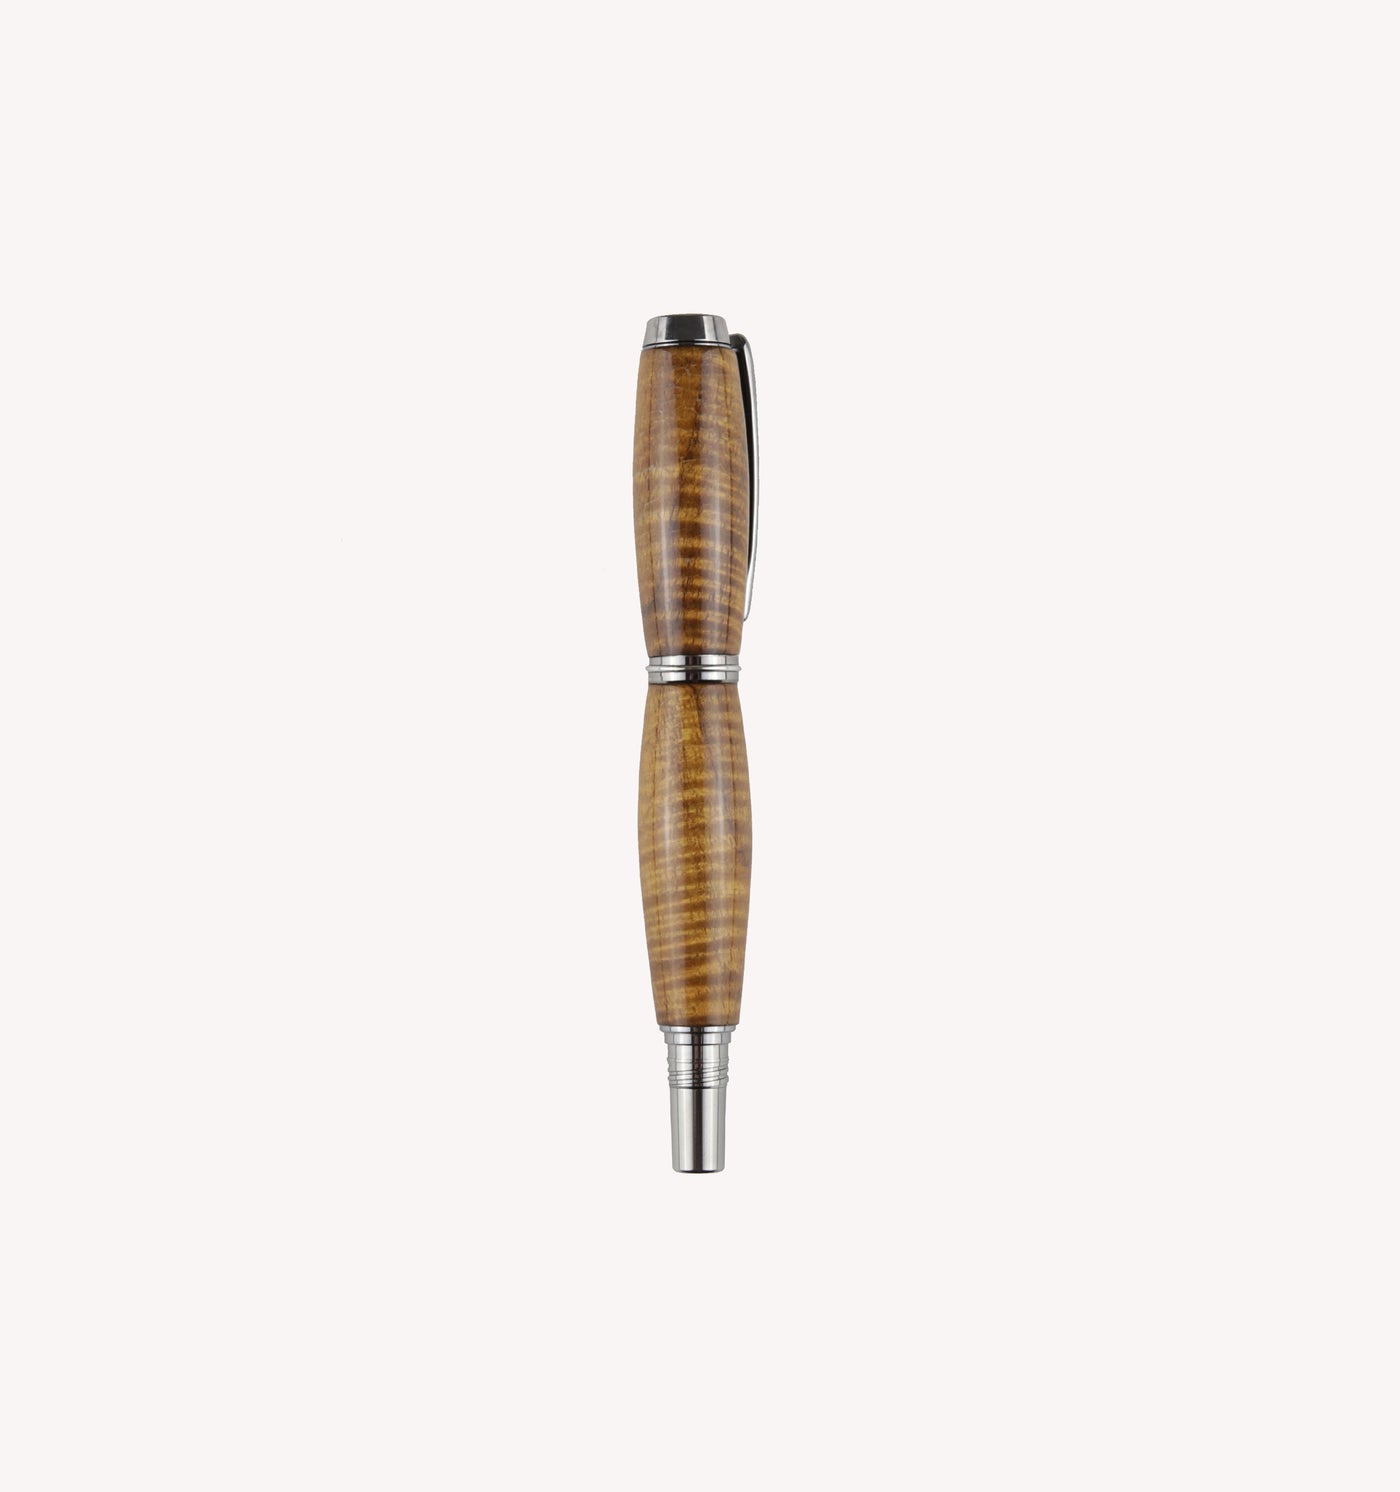 David Lee Mini Almond Burl Wood Pen